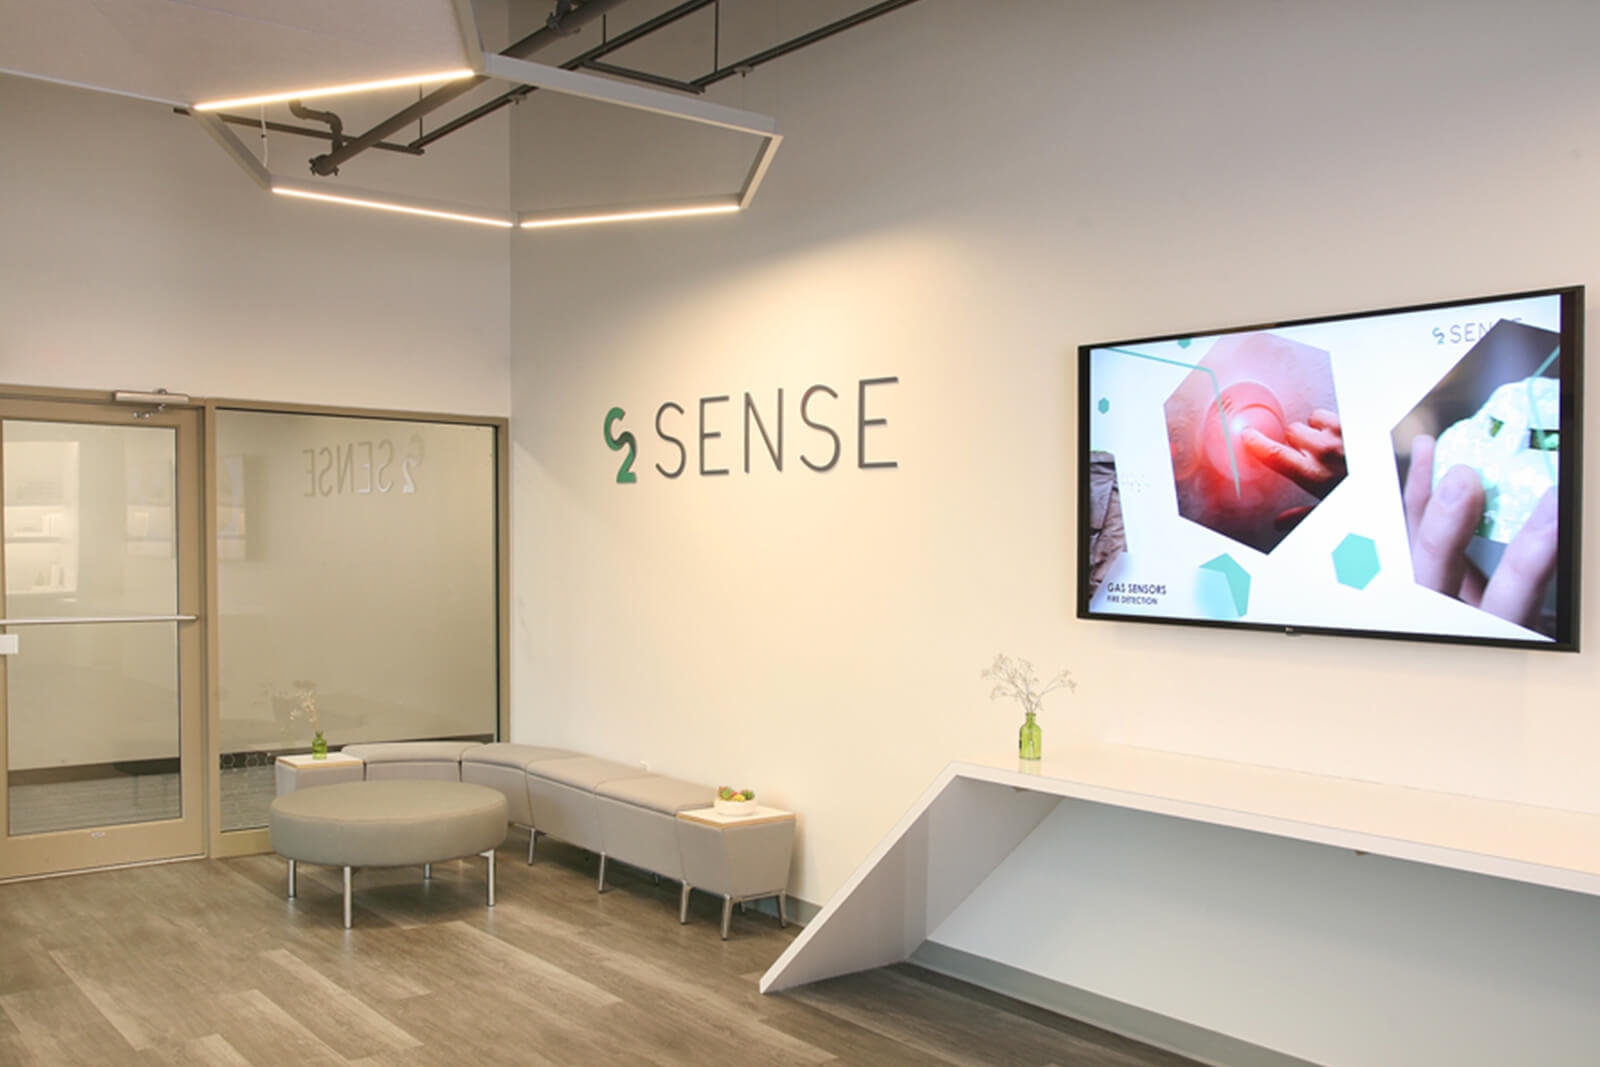 c2sense building photos - design build services firm life science & advanced technology firms 4